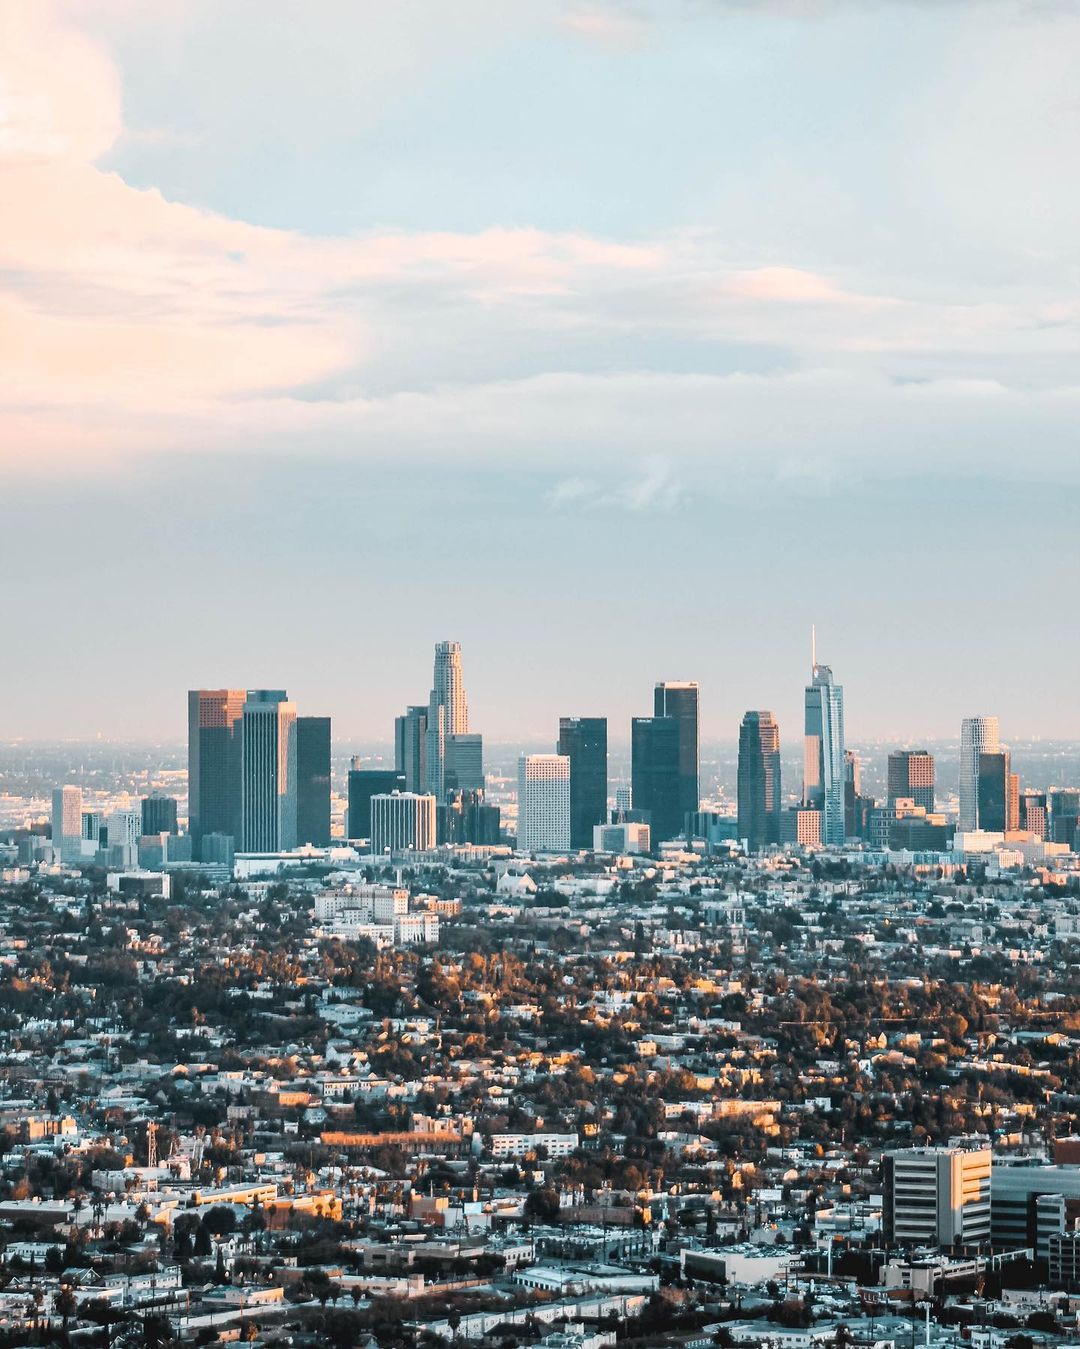 Downtown LA Skyline Photo from Afar. Photo by Instagram user @urbaniteliving